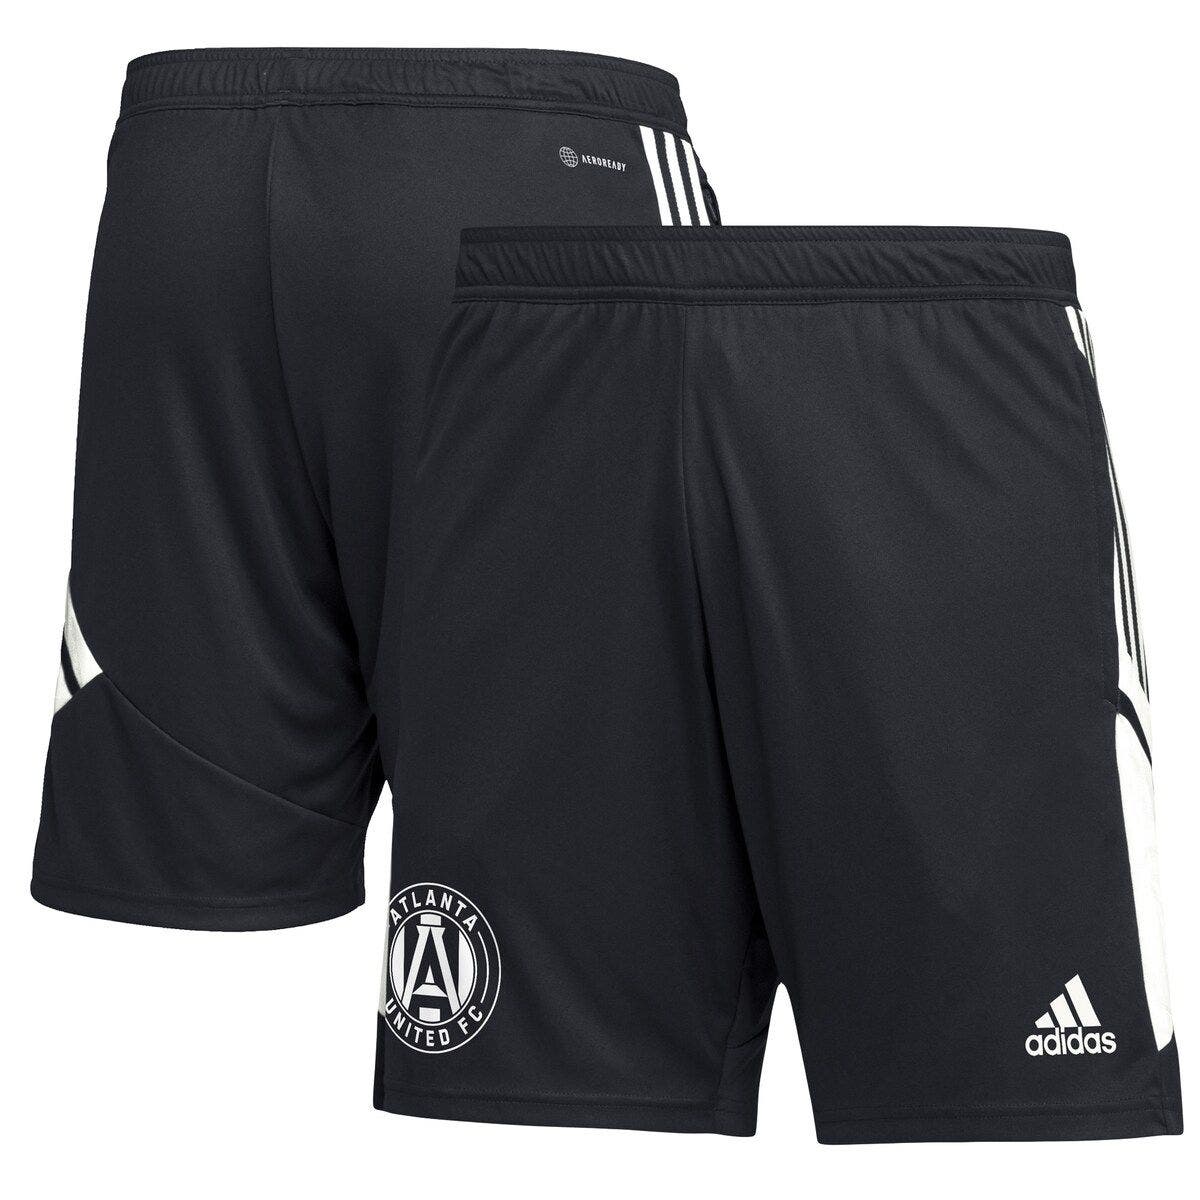 Men's adidas Black/White Atlanta United FC Soccer Training AEROREADY Shorts